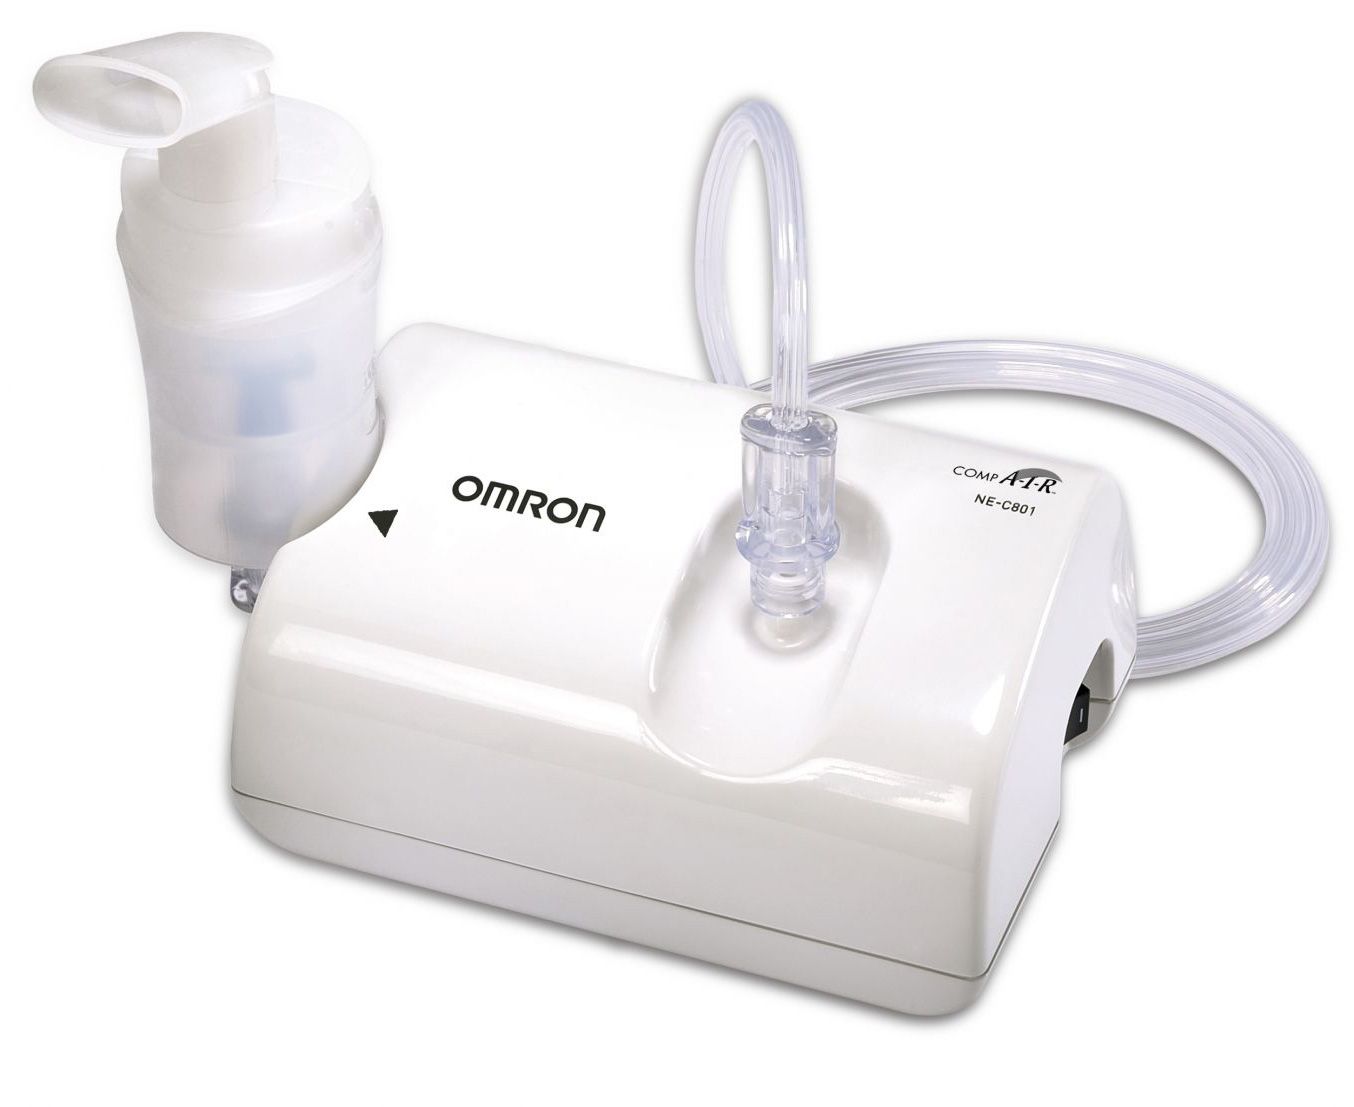 Omron nébuliseur Comp Air Pro C900 - Aérosol médical